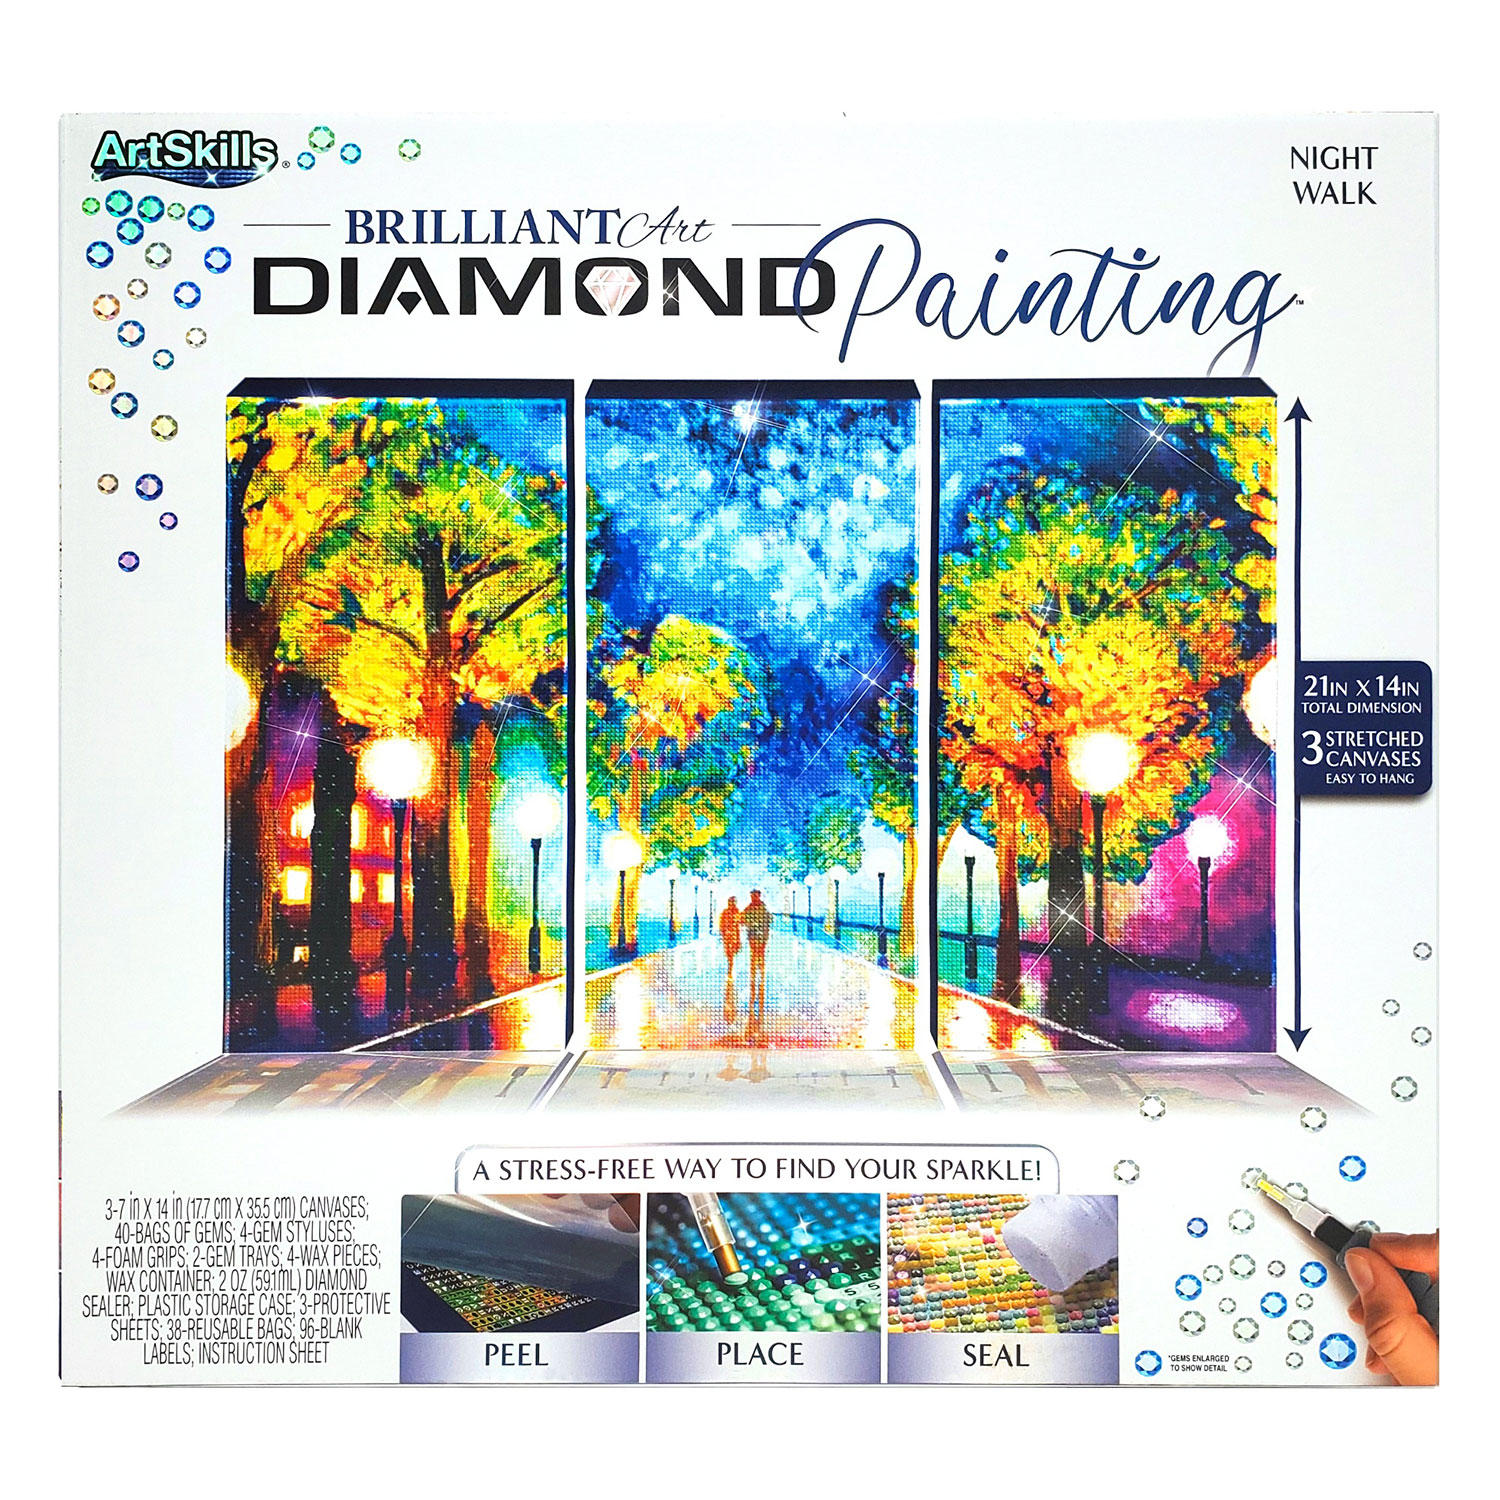 Brilliant Art Diamond Painting Night Walk